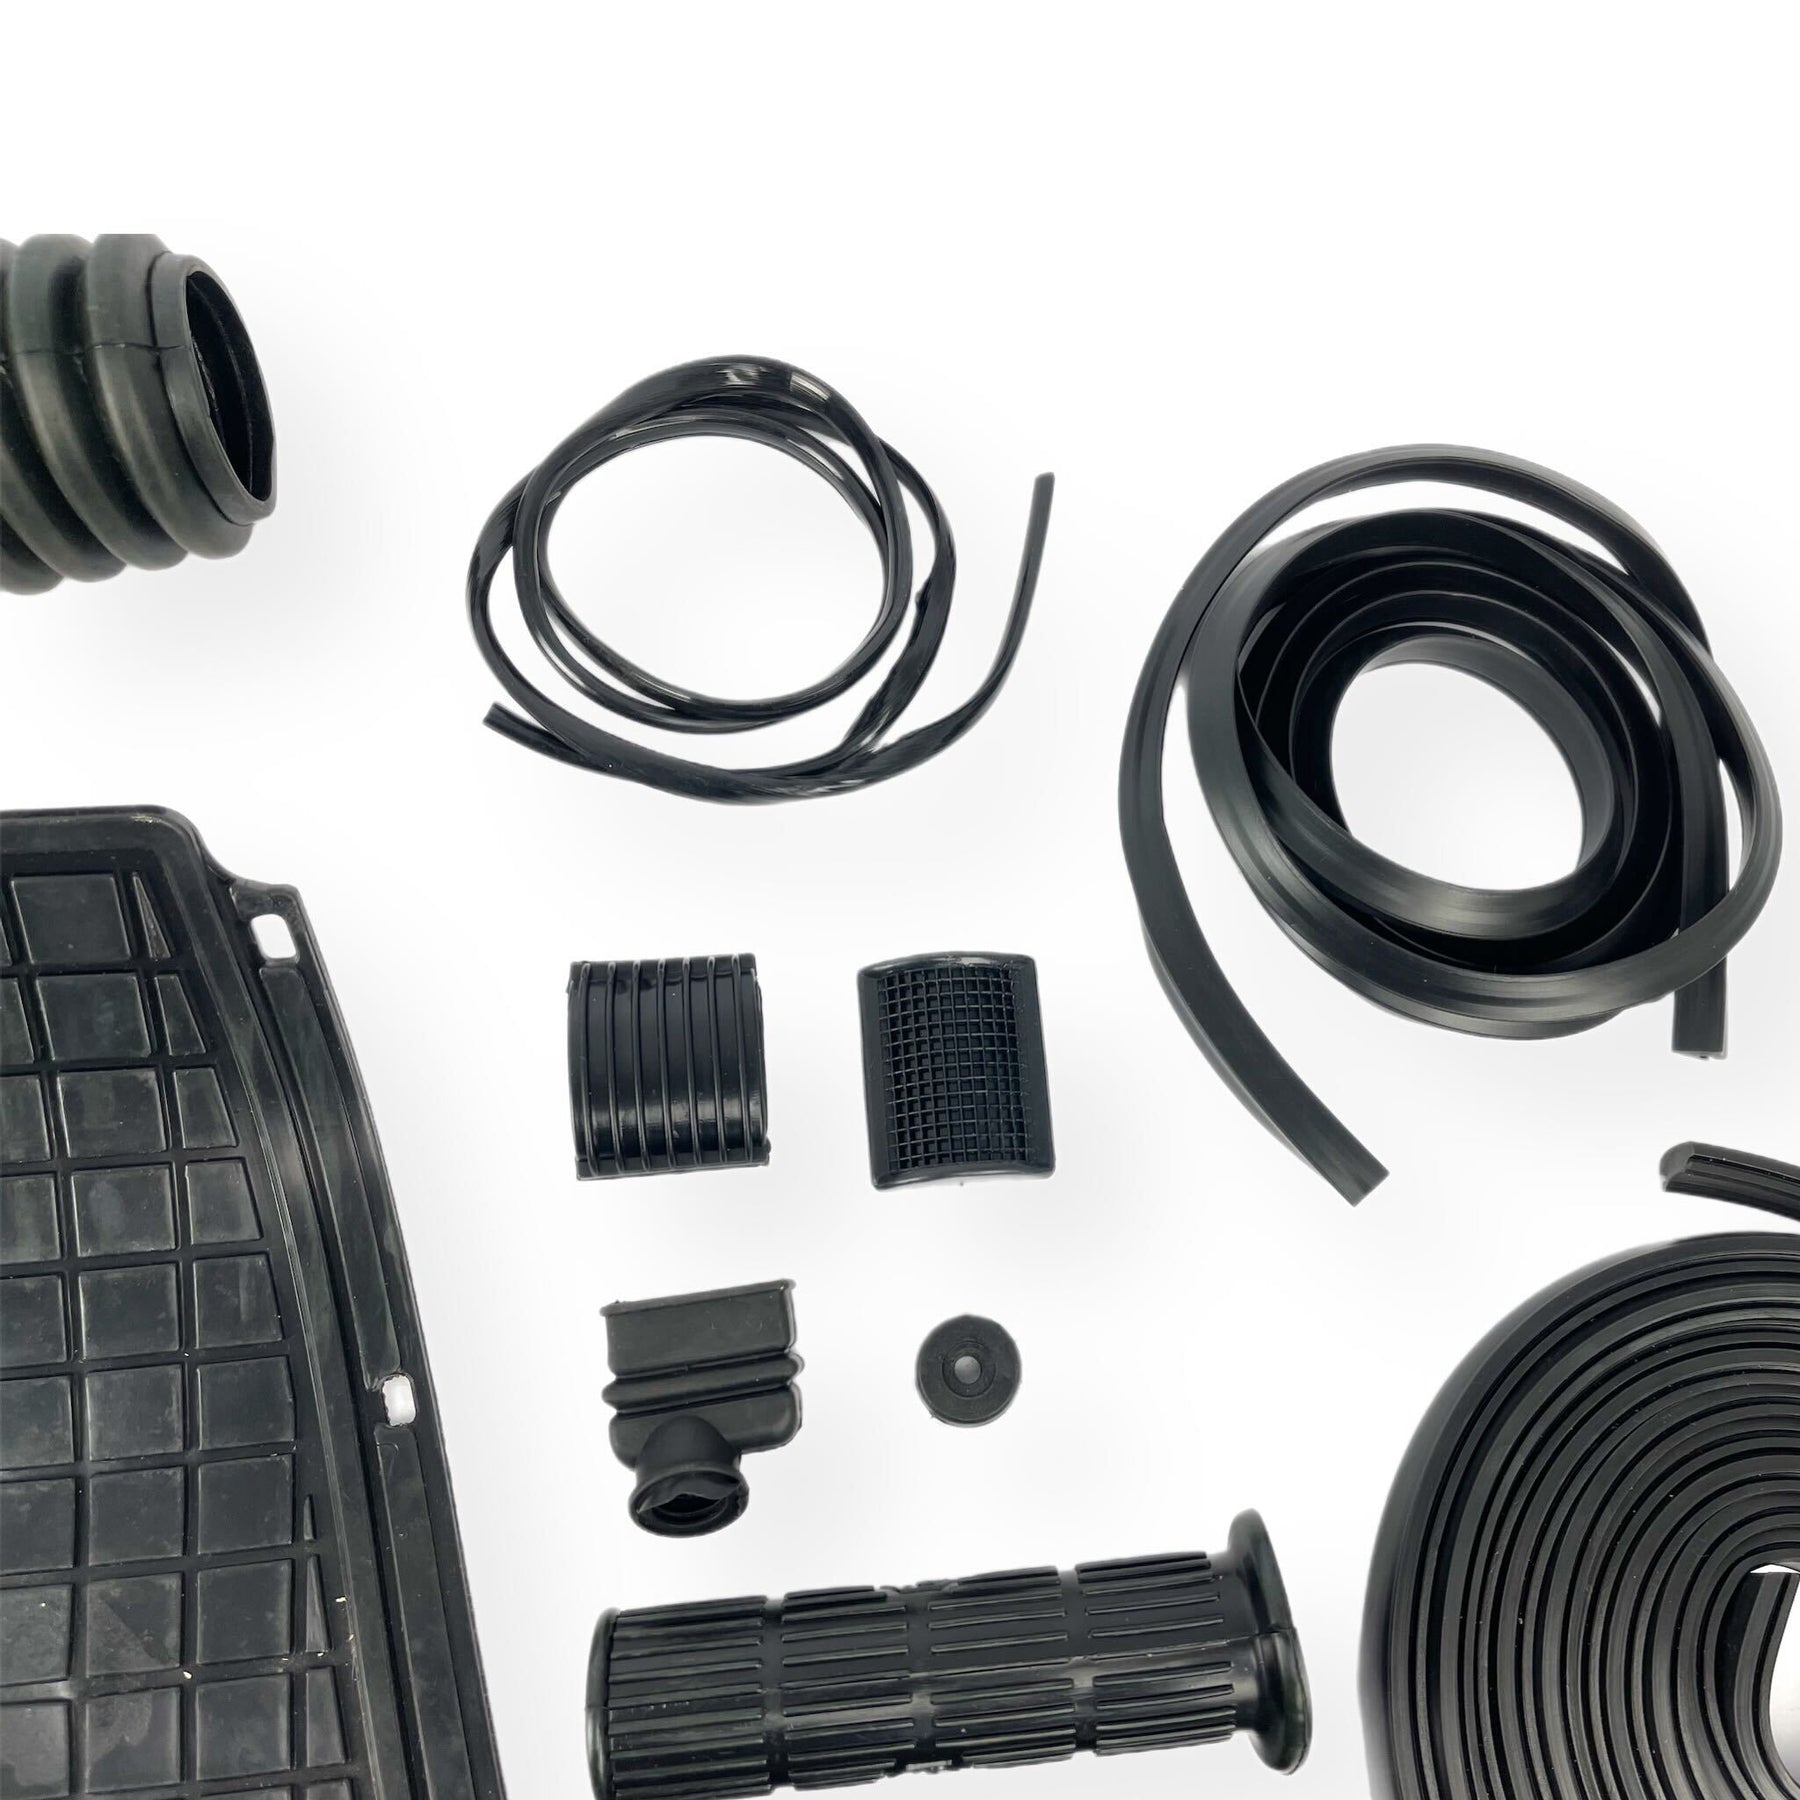 Vespa PX PE T5 Complete Rubber Kit Set Pack - Black